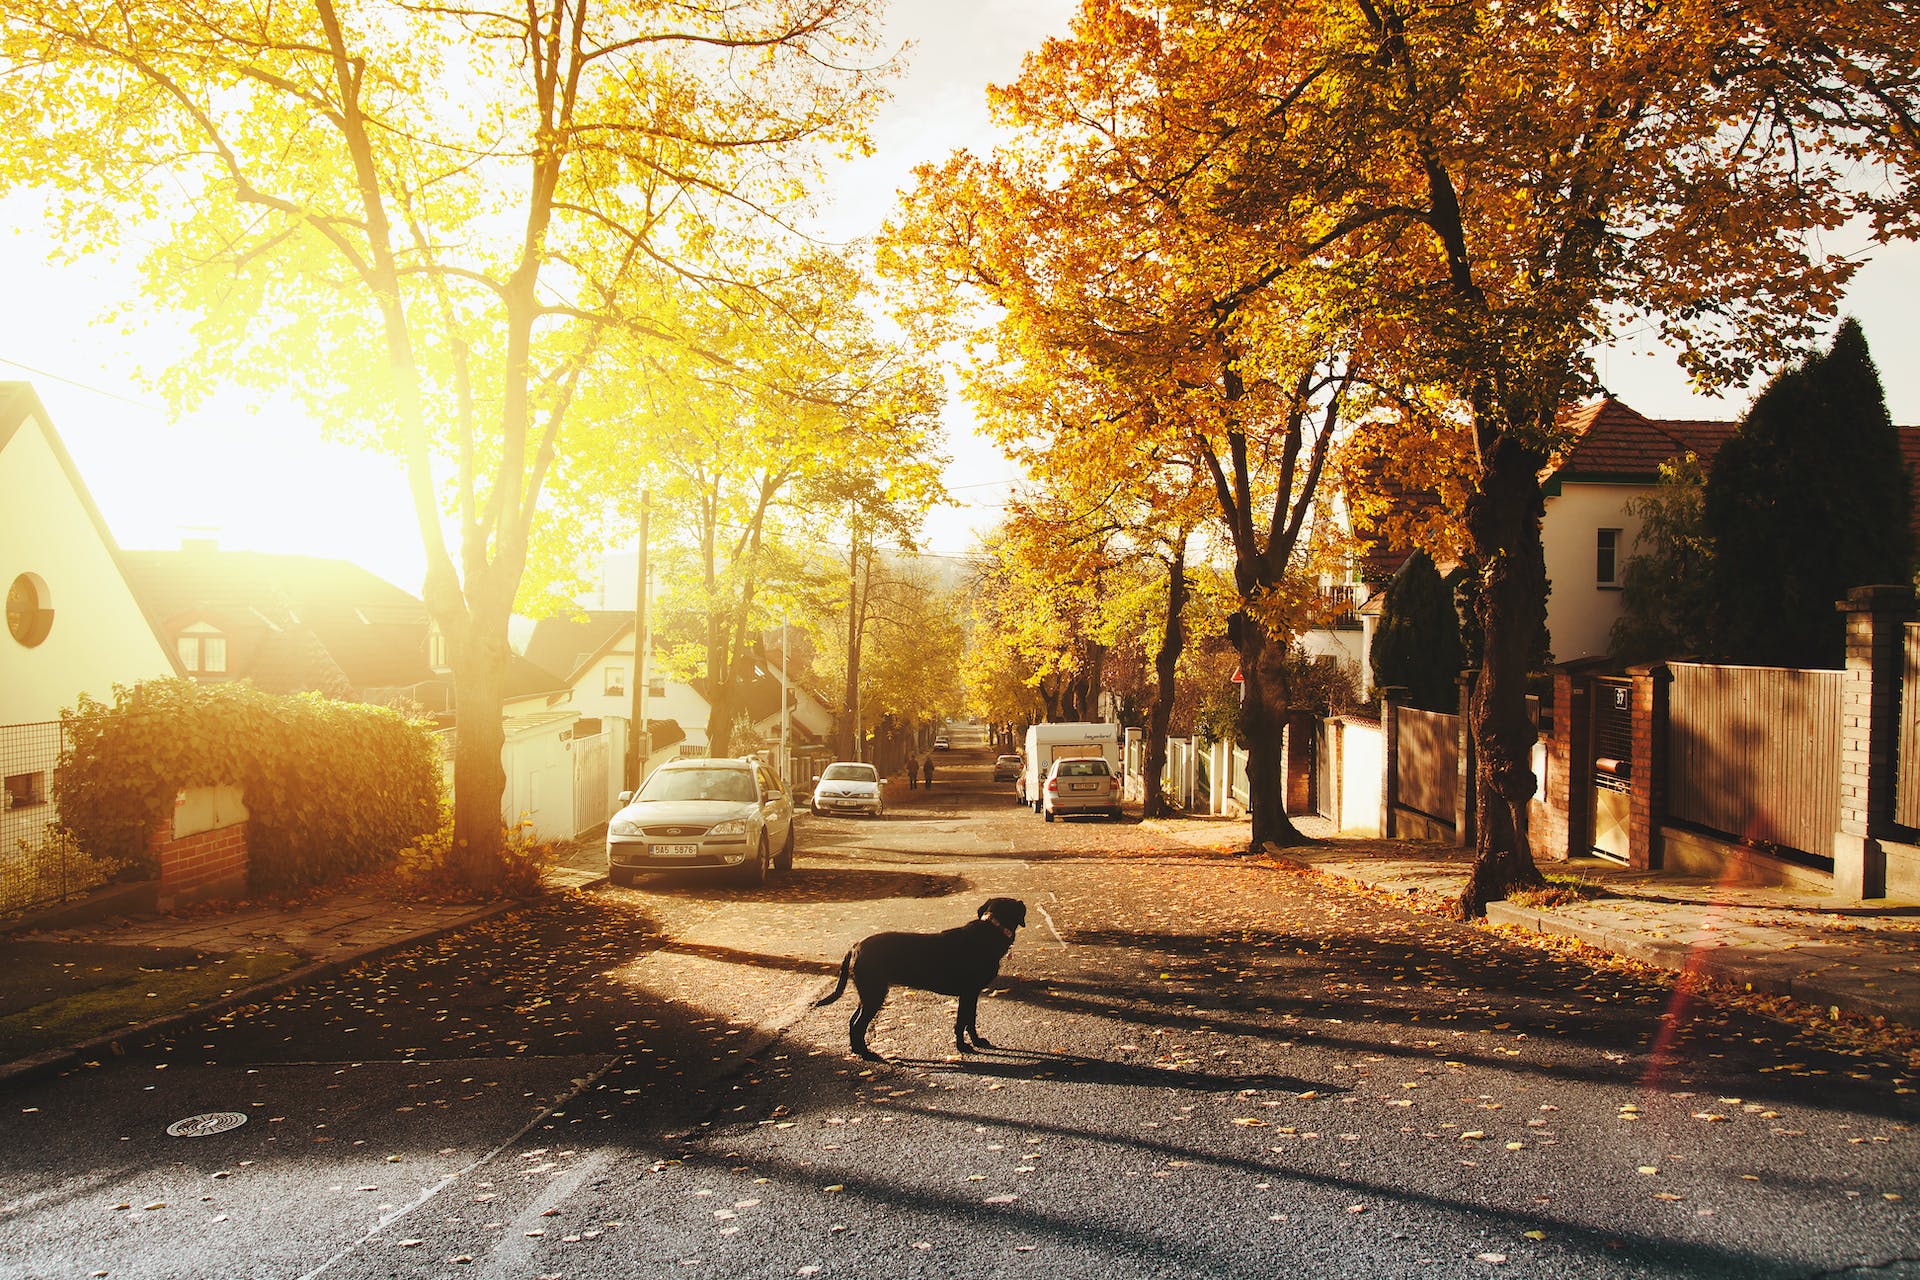 A peaceful suburban street | Source: Pexels